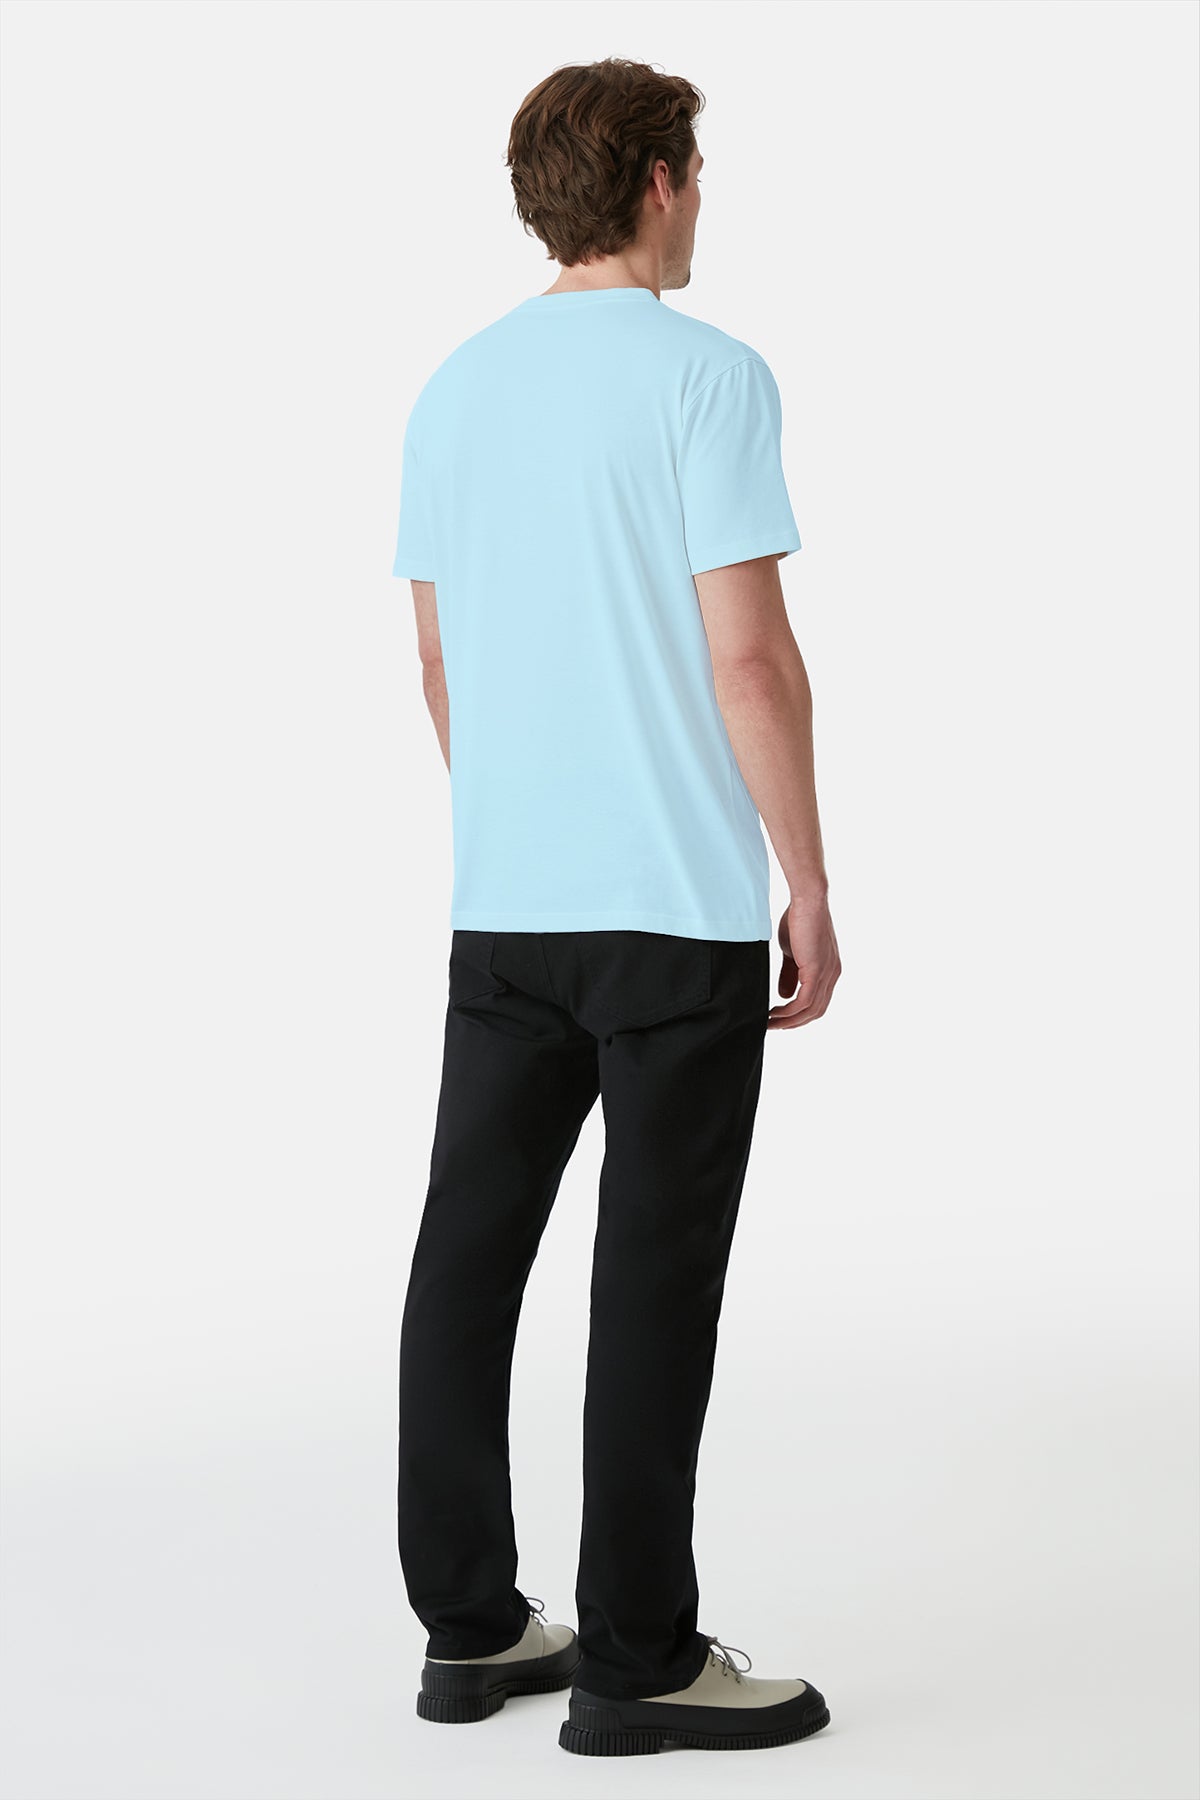 İmparator Penguen Light-Weight T-shirt - Mint Mavi